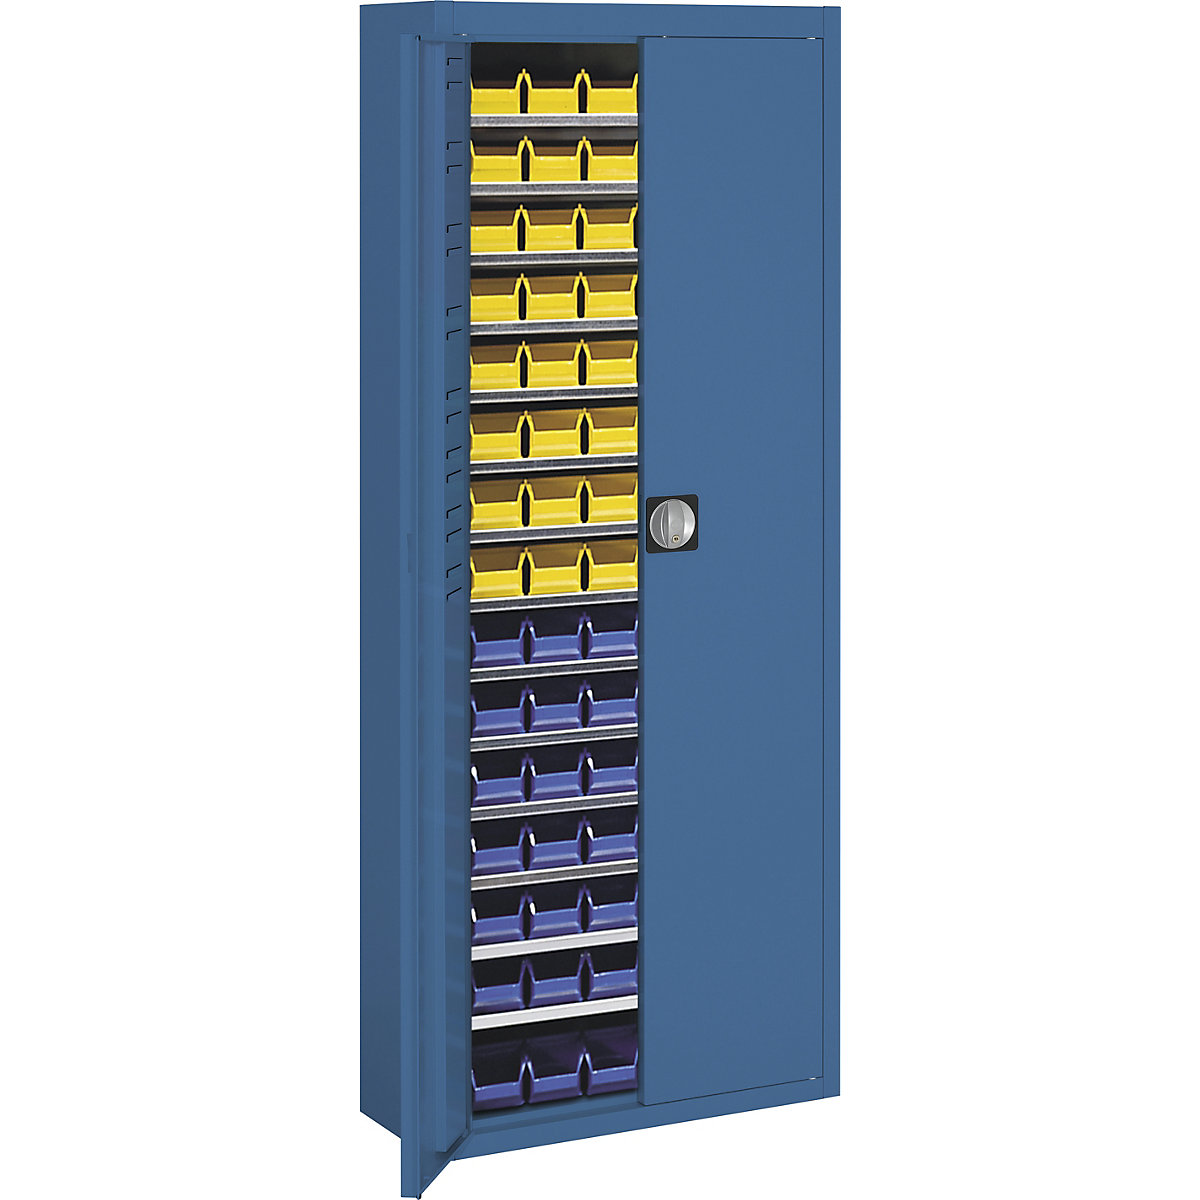 Storage cupboard with open fronted storage bins – mauser, HxWxD 1740 x 680 x 280 mm, single colour, blue, 90 bins-4